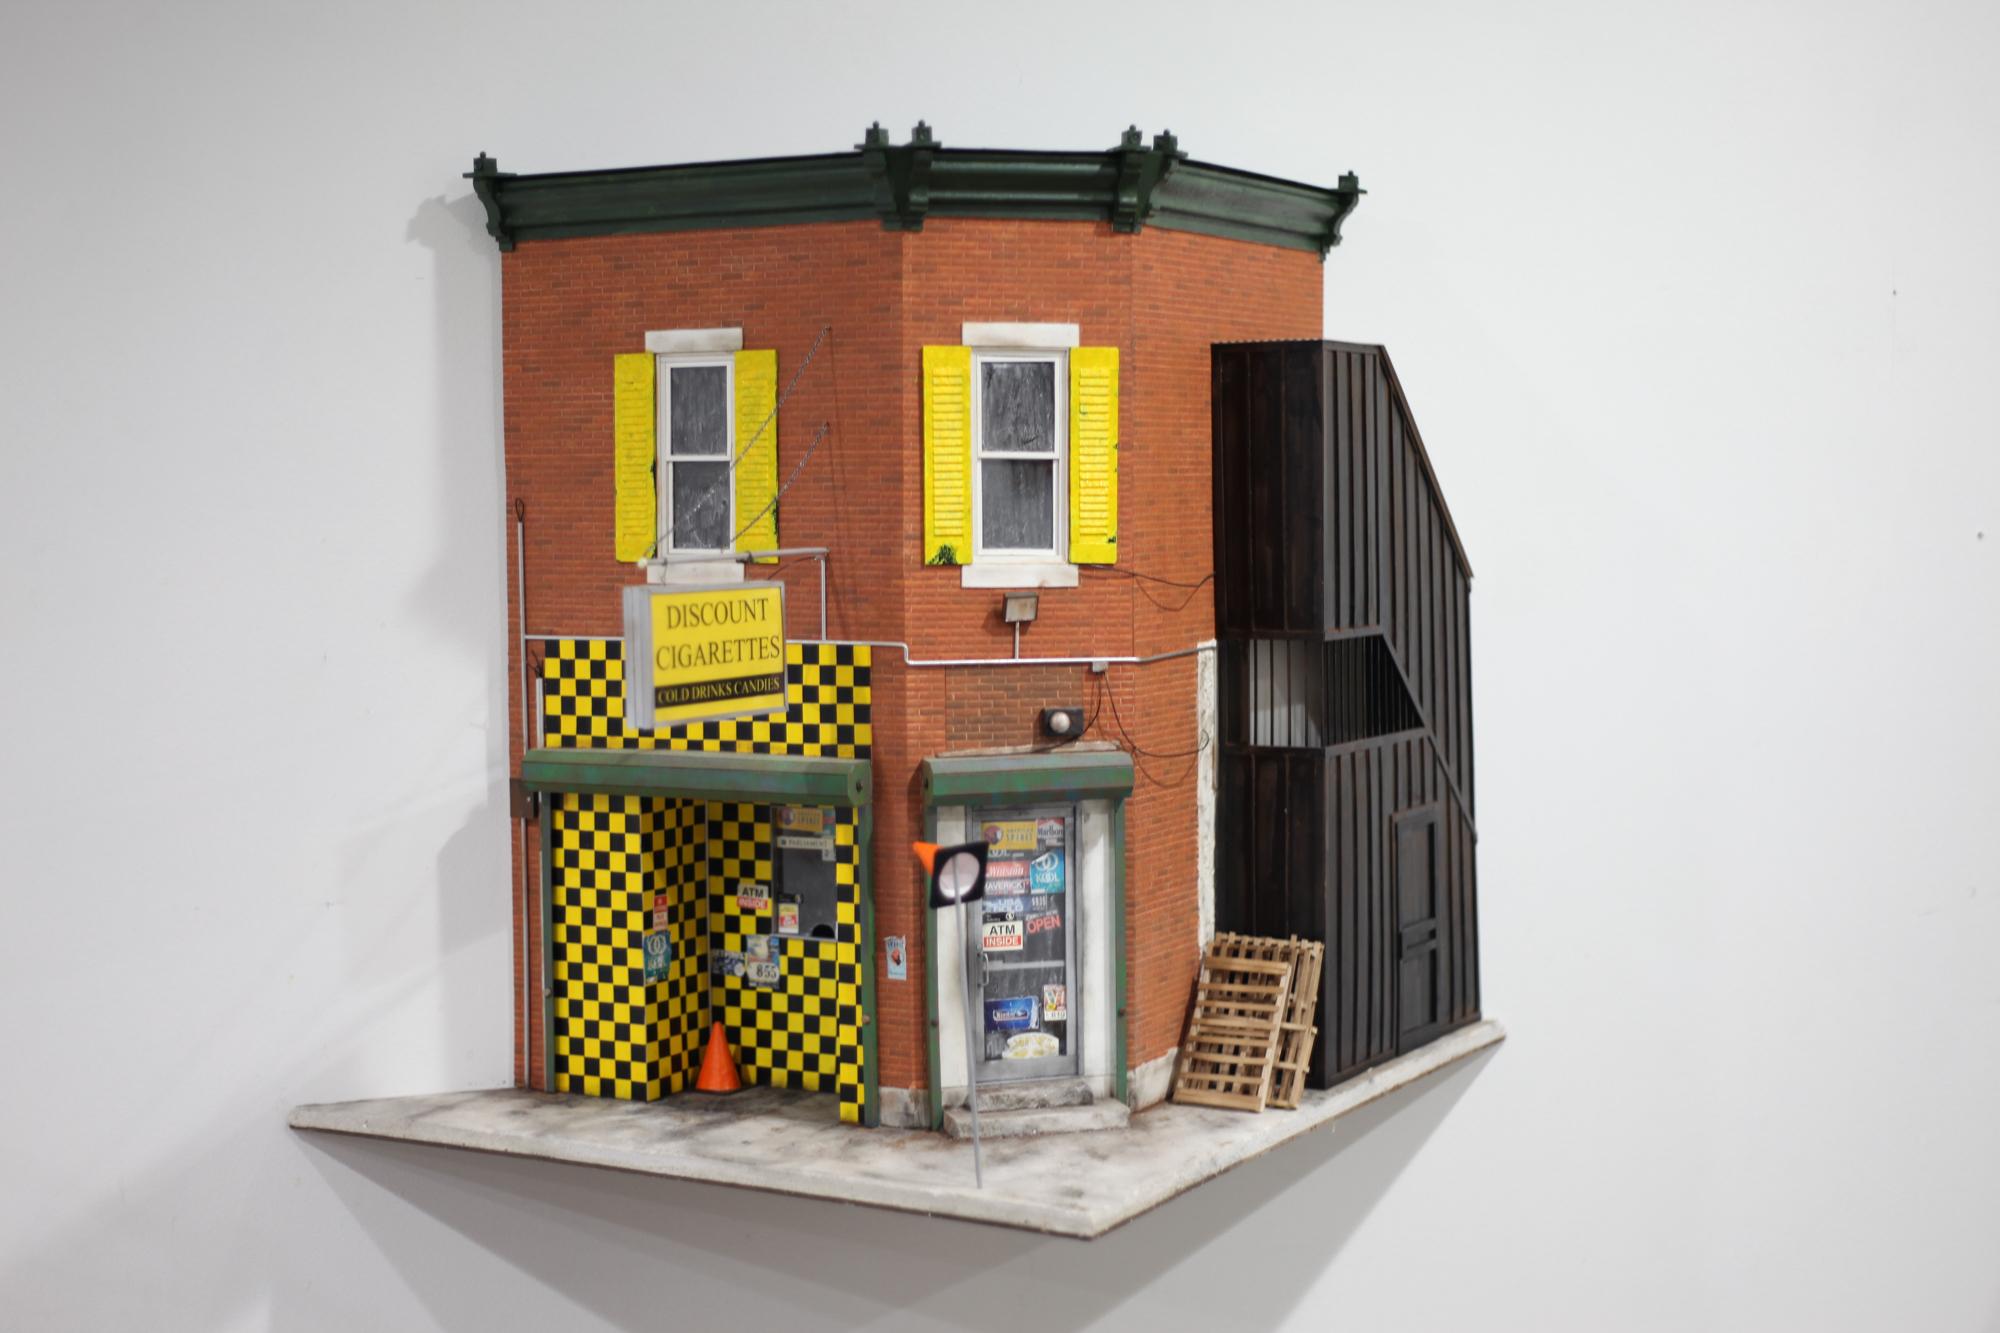 Drew Leshko Figurative Sculpture - "Discount Cigarettes", Miniature, Architecture, Building, Cityscape, Sculpture